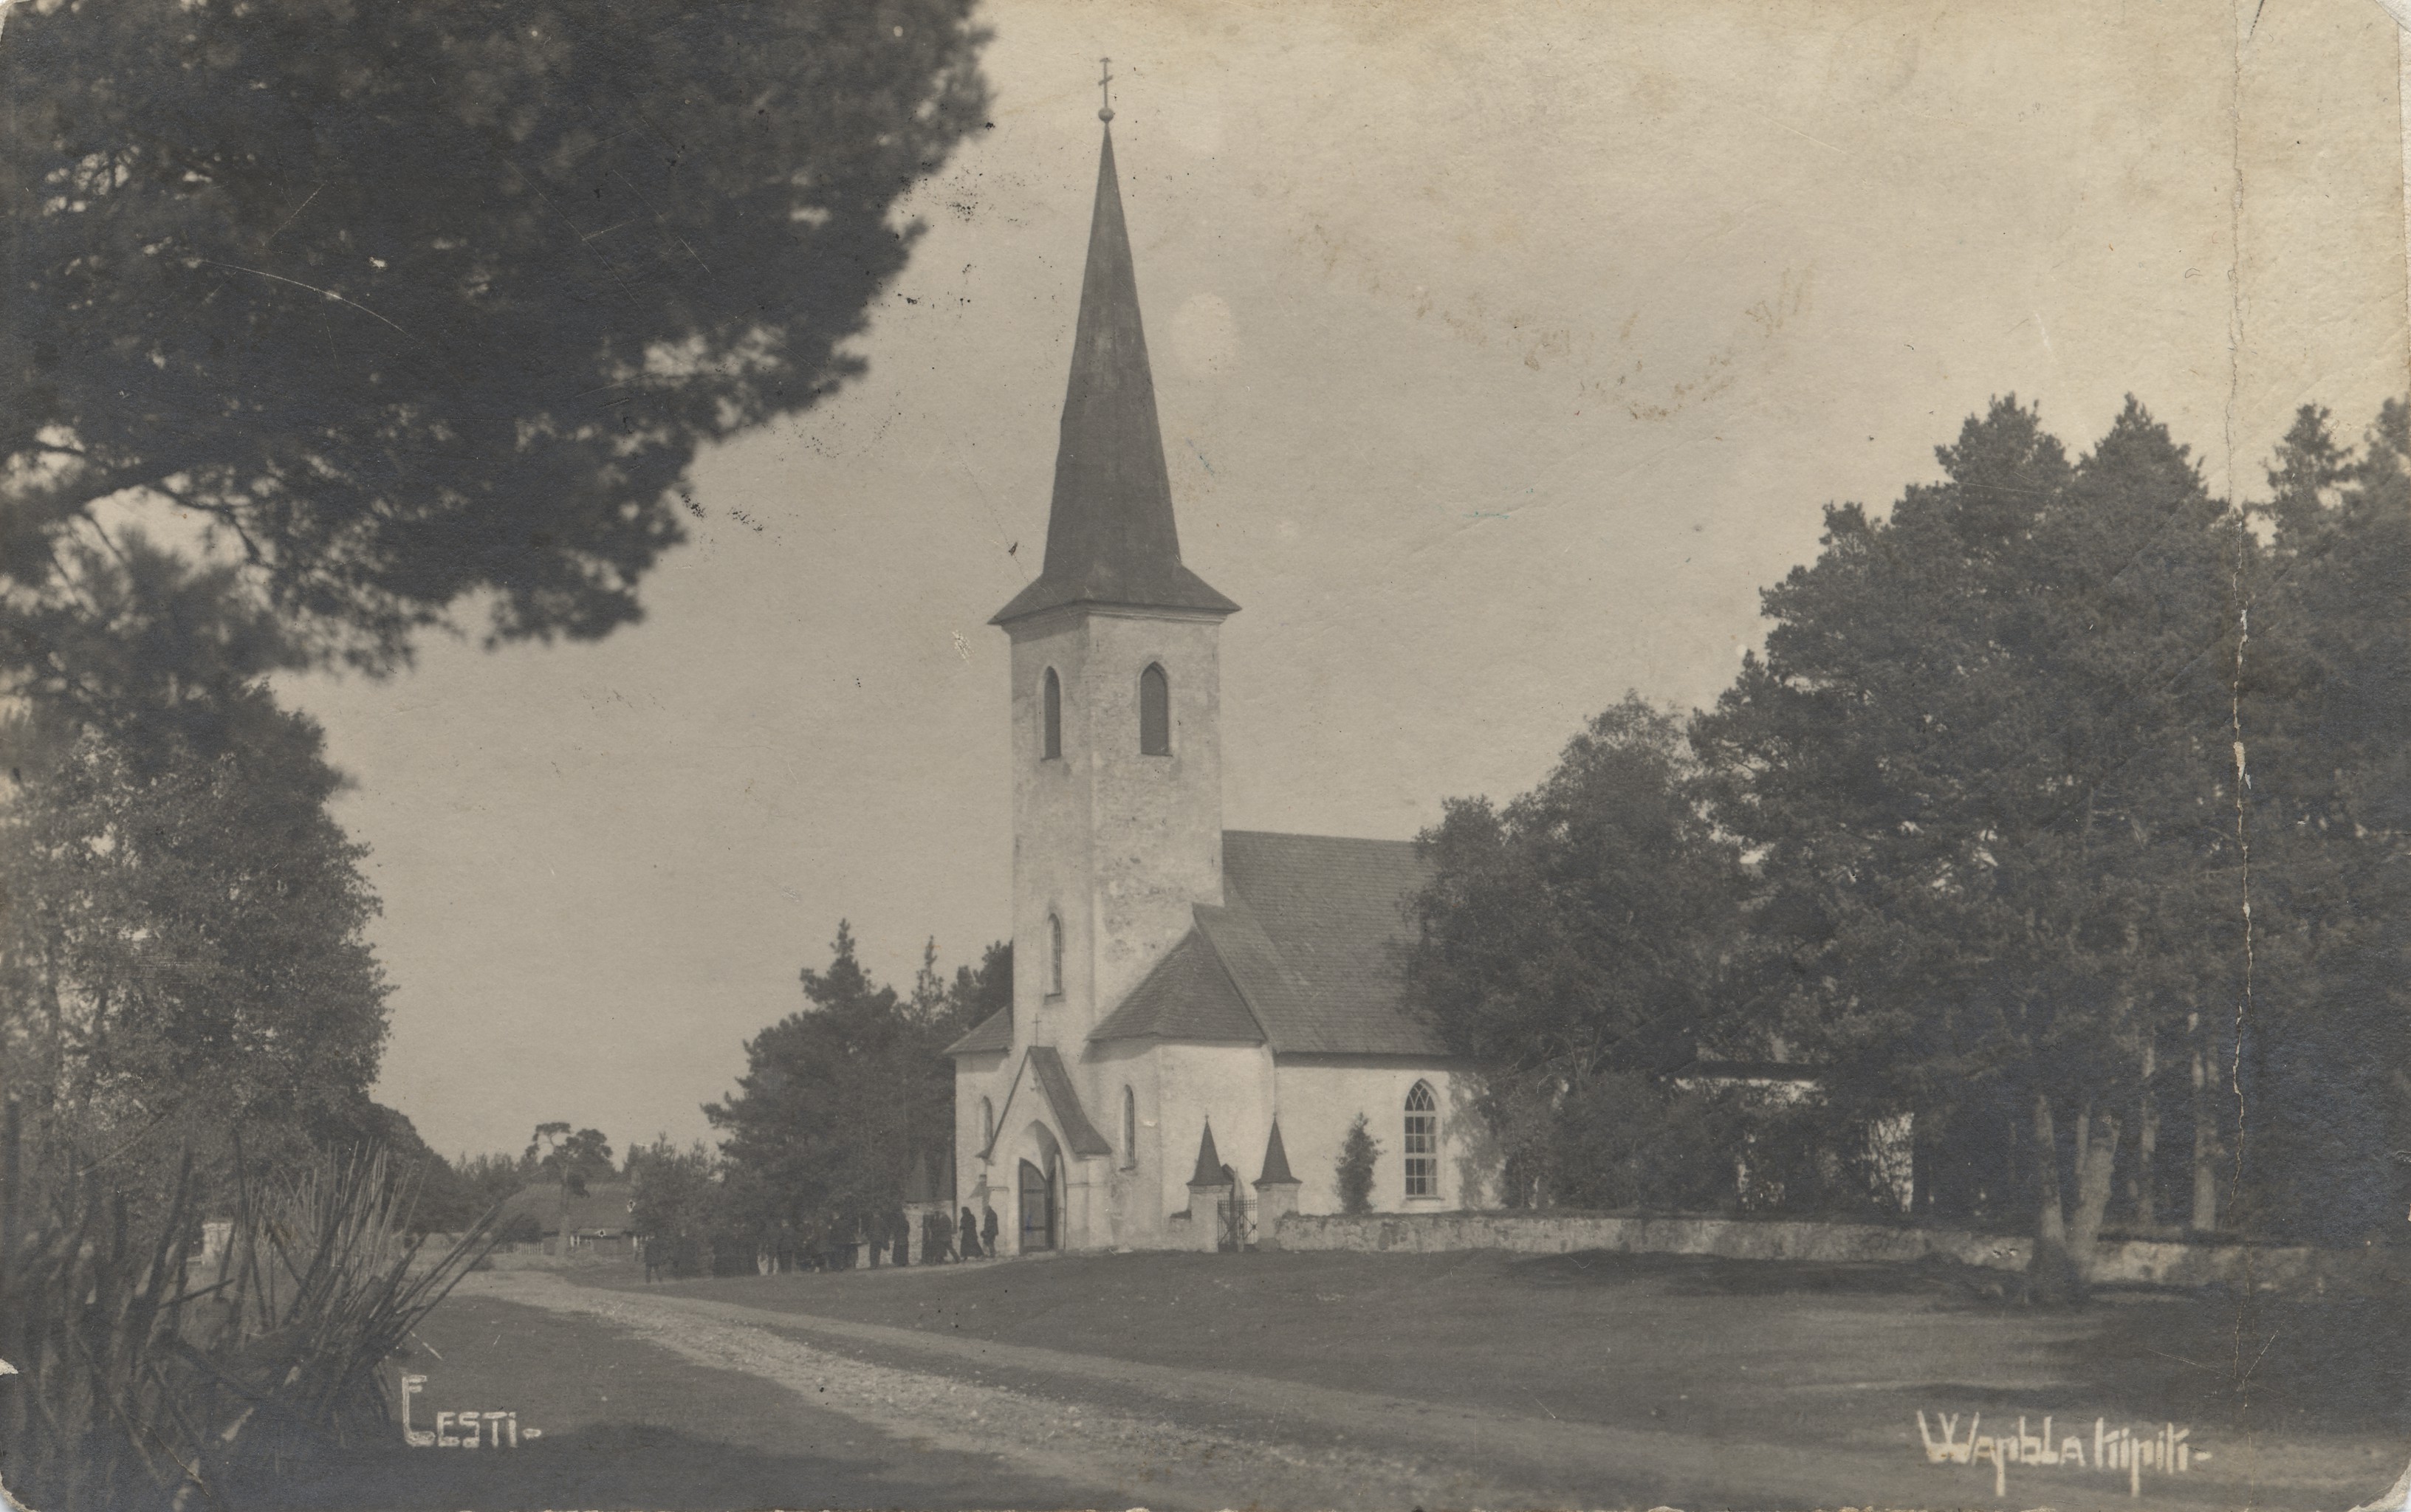 Estonia : Warbla Church